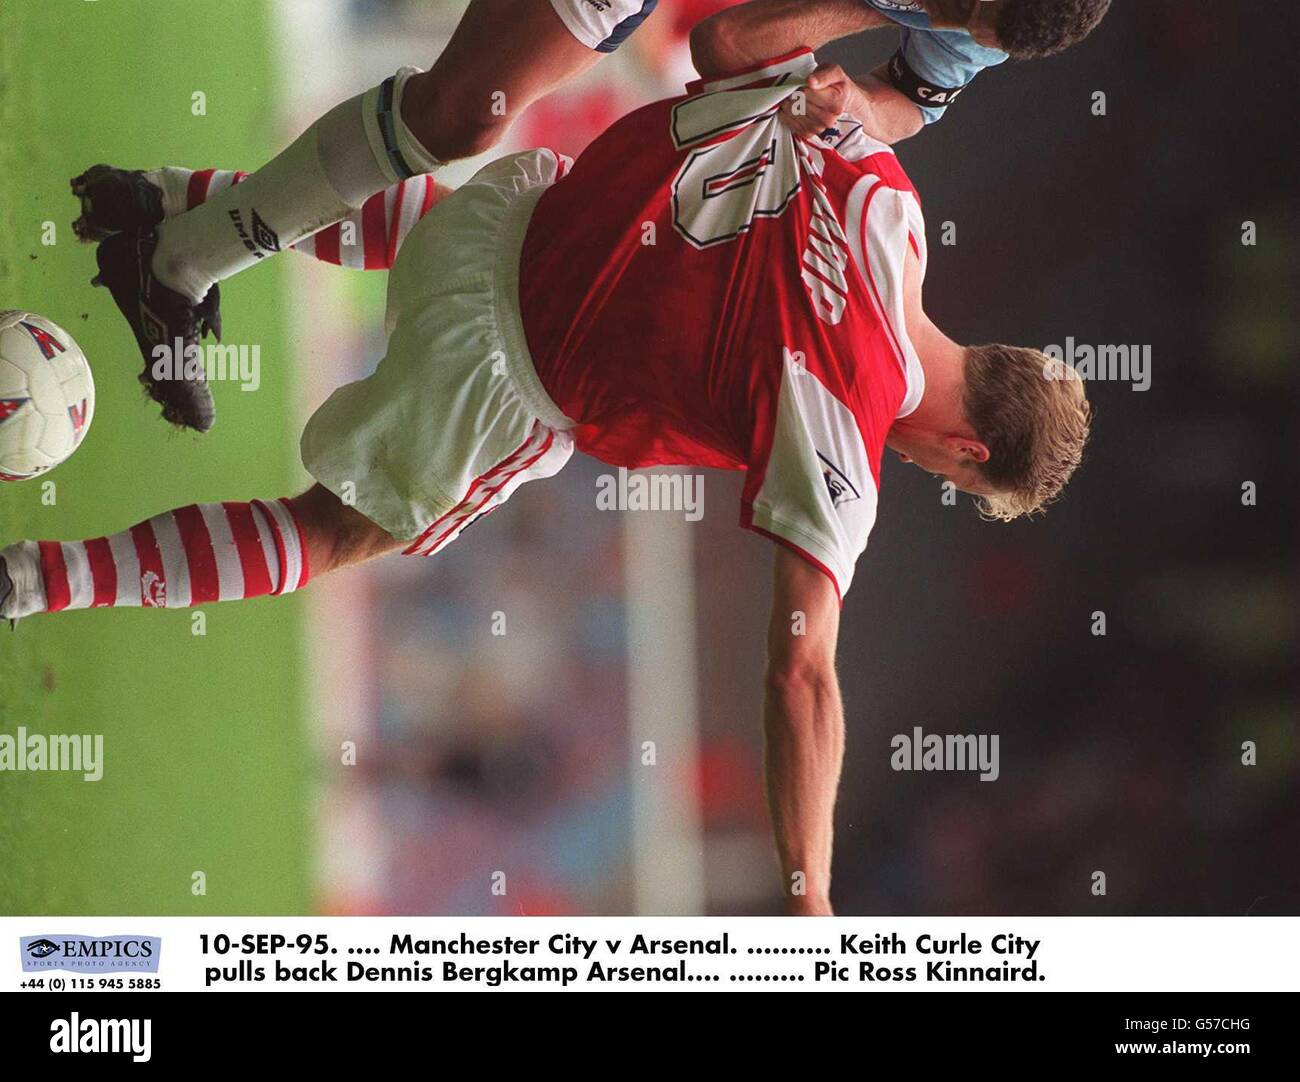 10-SEP-95. .... Manchester City contra Arsenal. .......... Keith Curle City devuelve a Dennis Bergkamp Arsenal Foto de stock